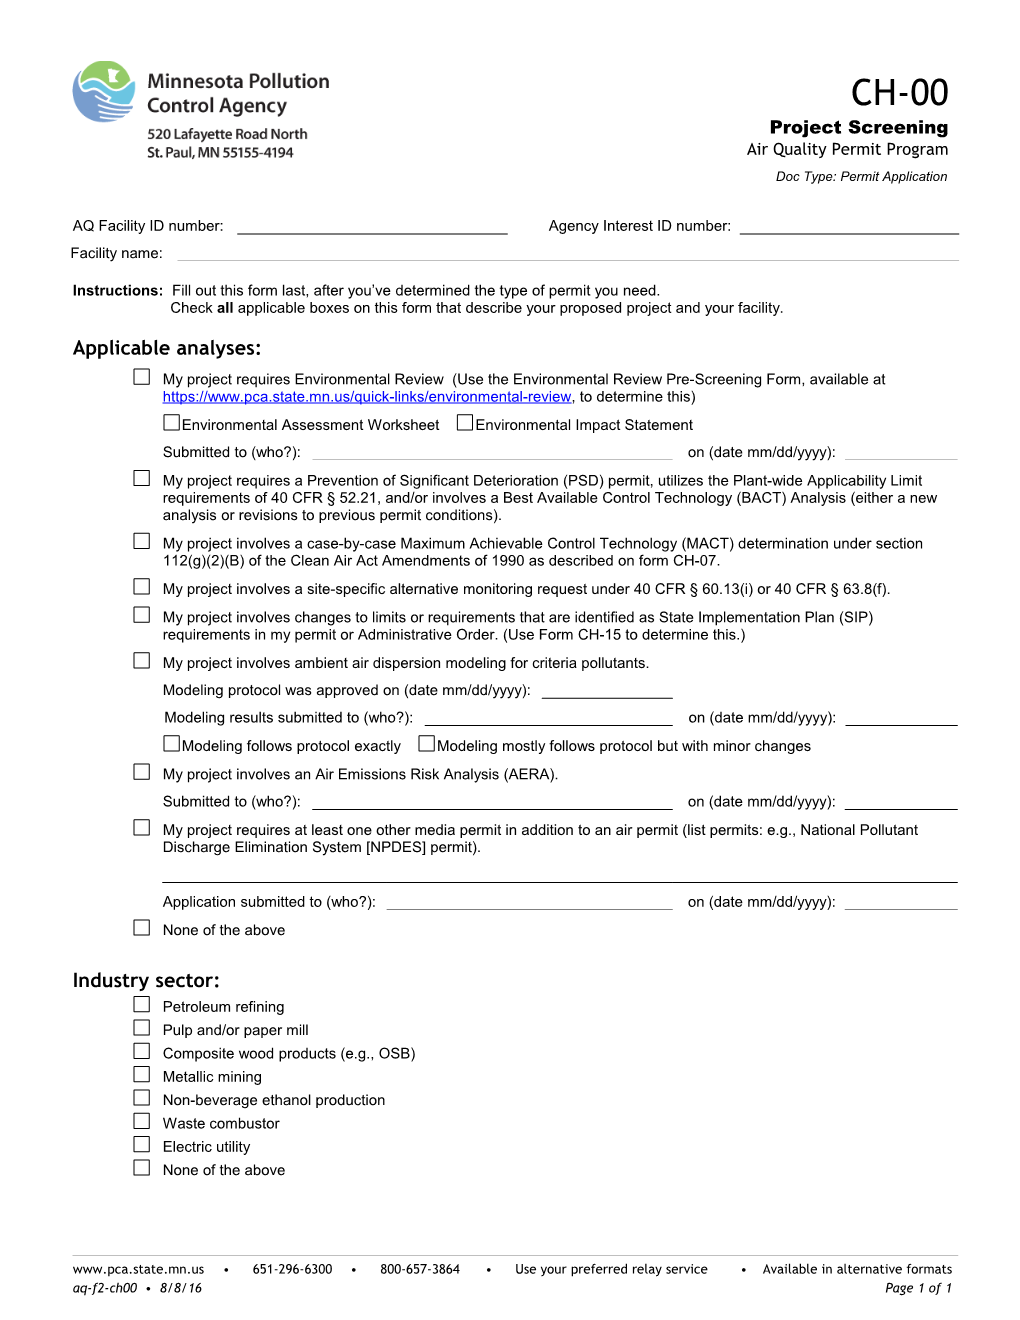 CH-00 Project Screening - Air Quality Permit Program - Form